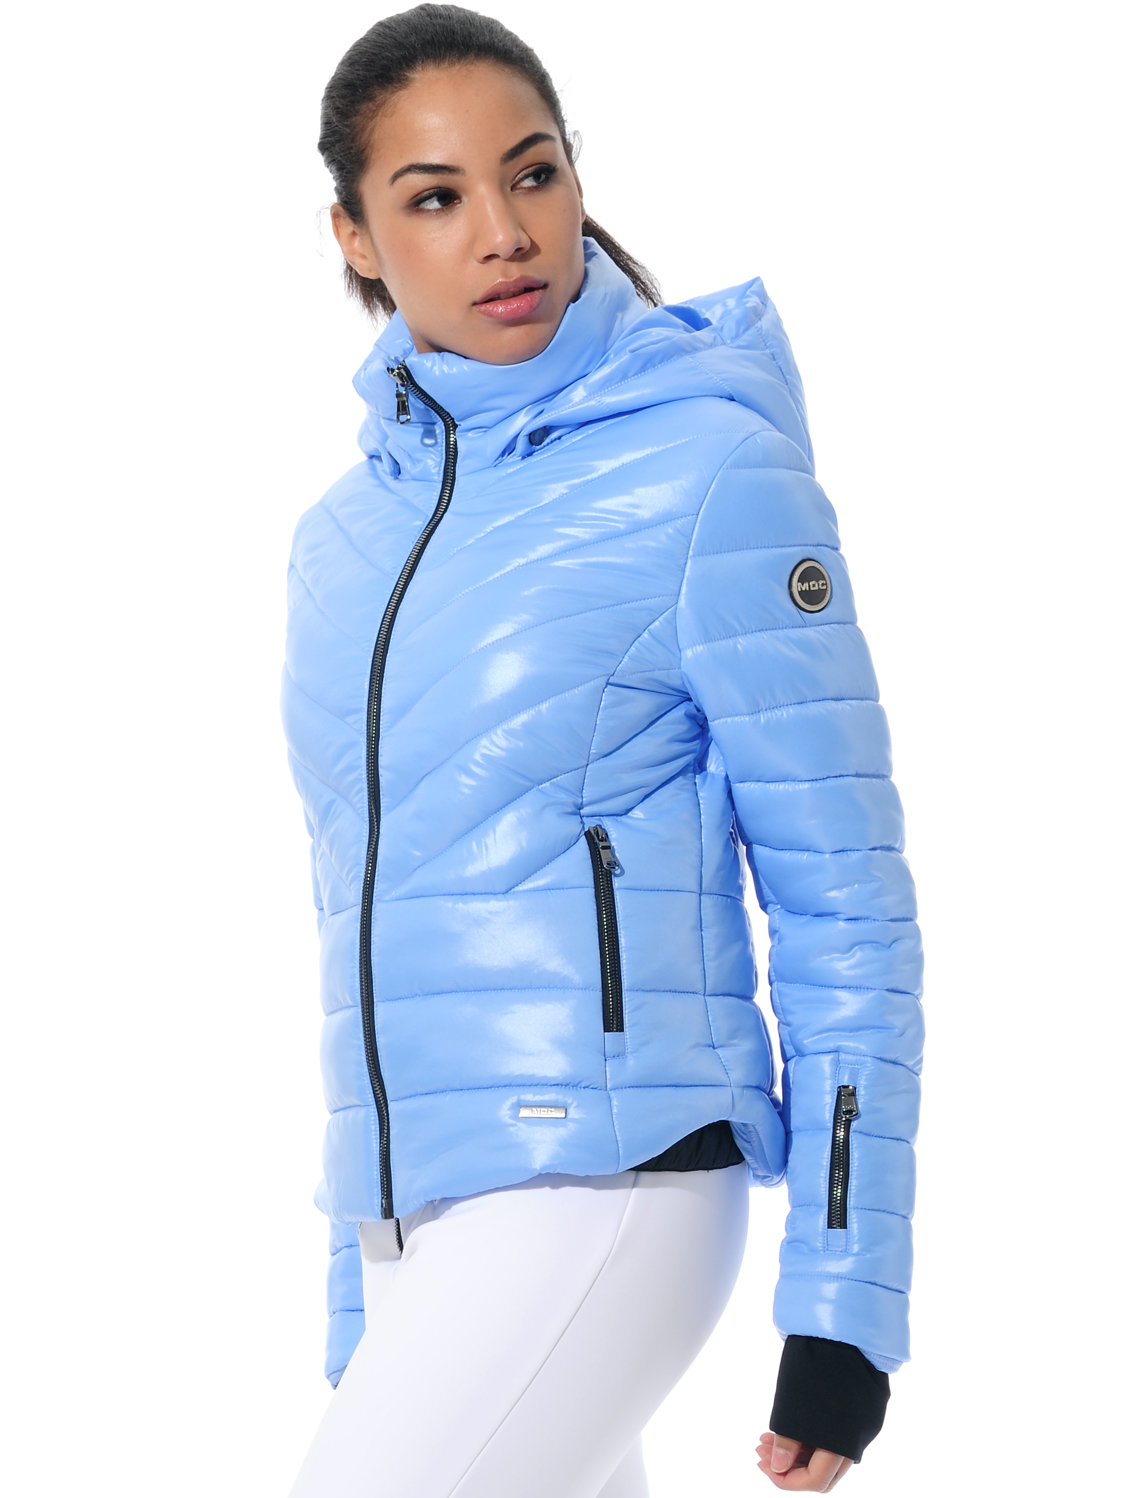 shiny ski jacket baby blue 